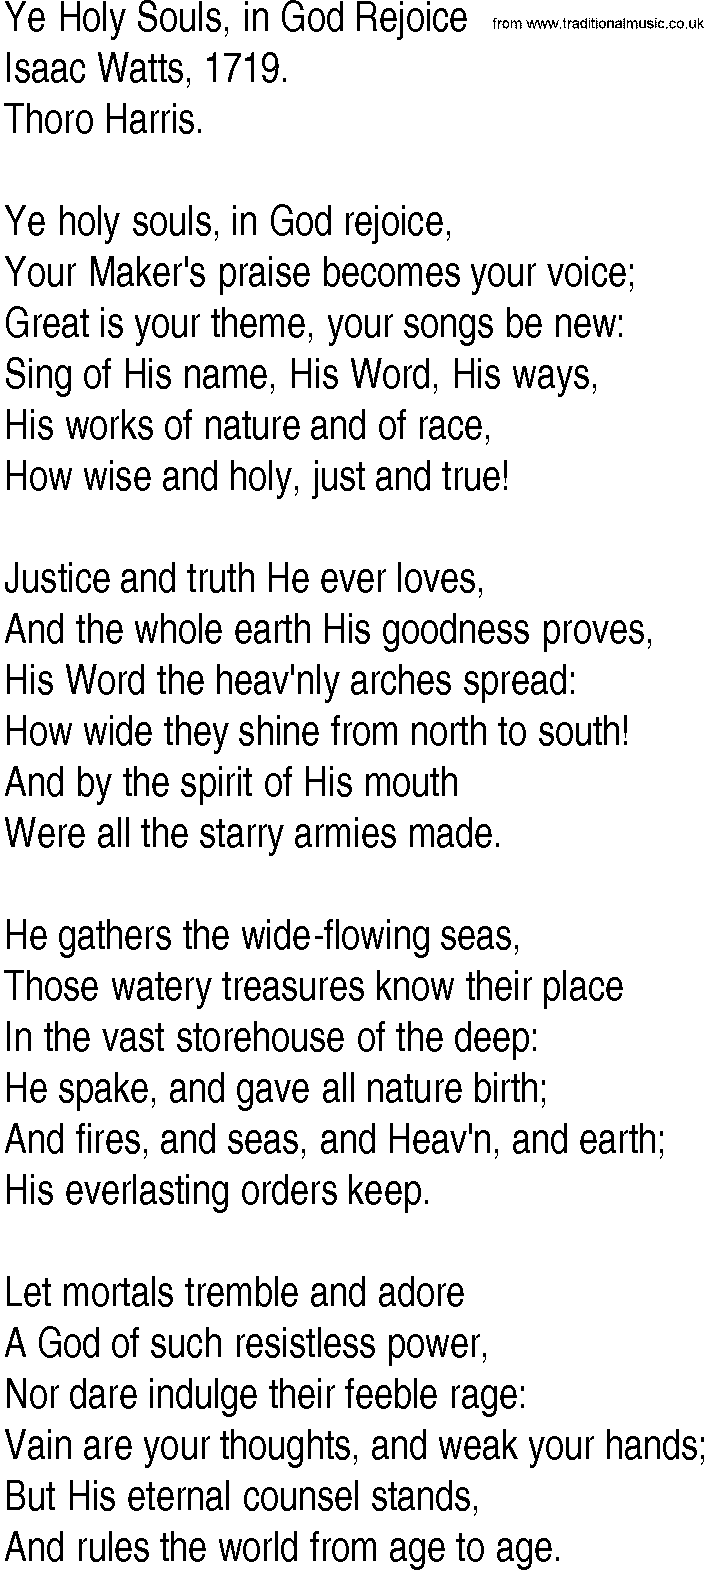 Hymn and Gospel Song: Ye Holy Souls, in God Rejoice by Isaac Watts lyrics